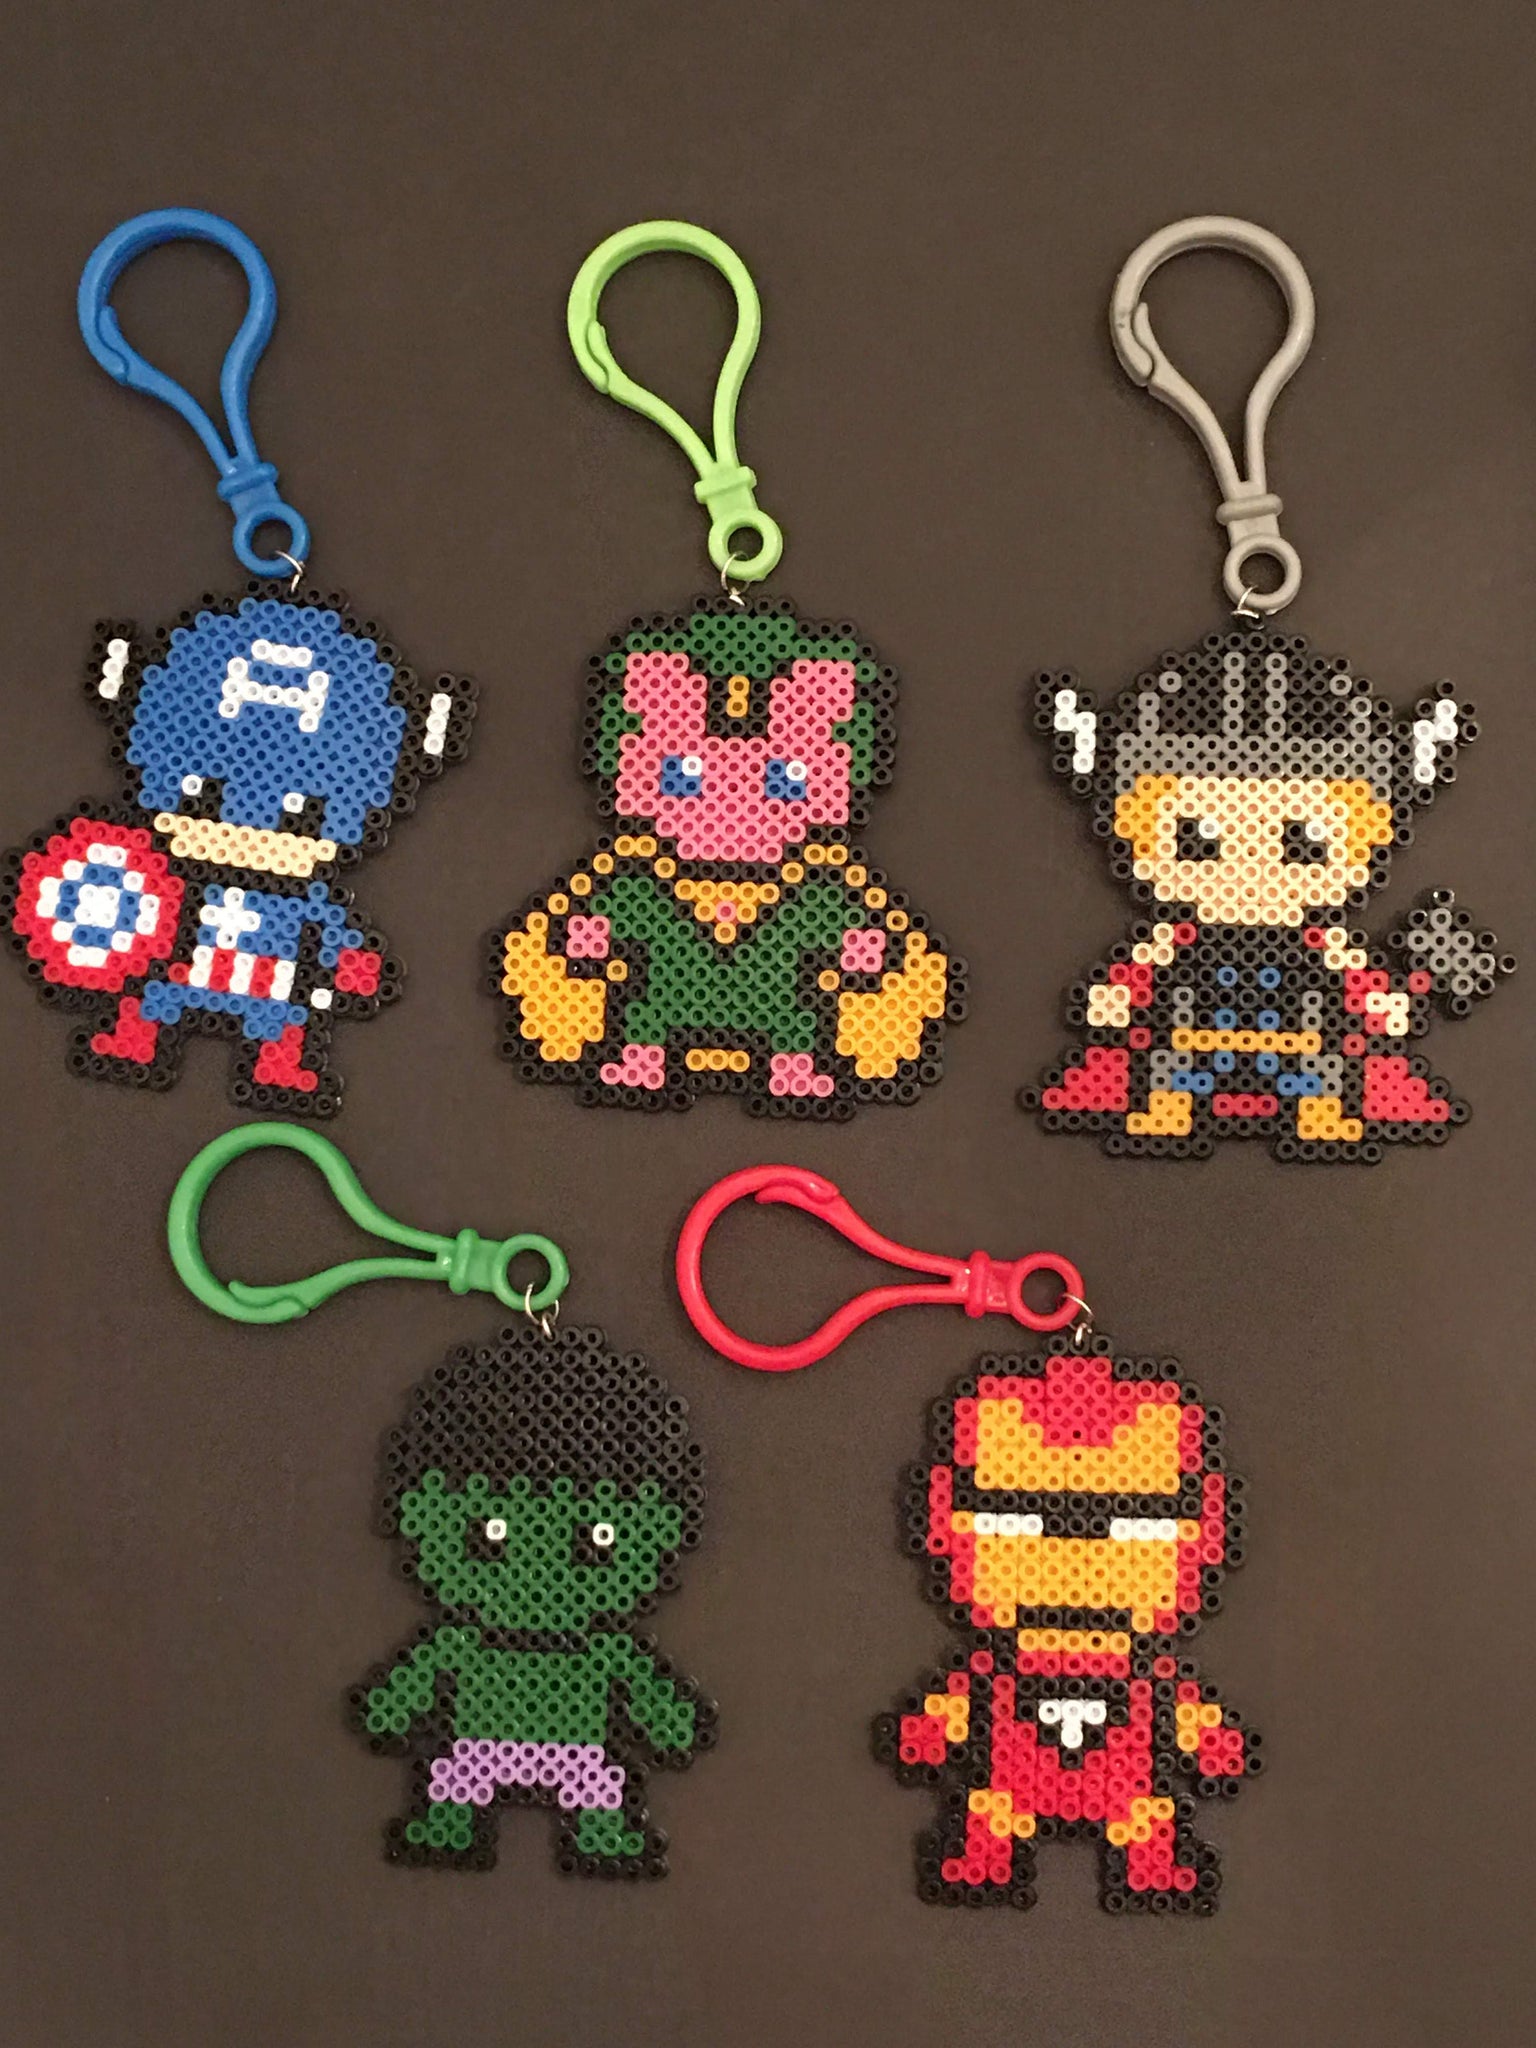 Iron-Man Mini Perler beads  Perler beads, Perler crafts, Easy perler beads  ideas